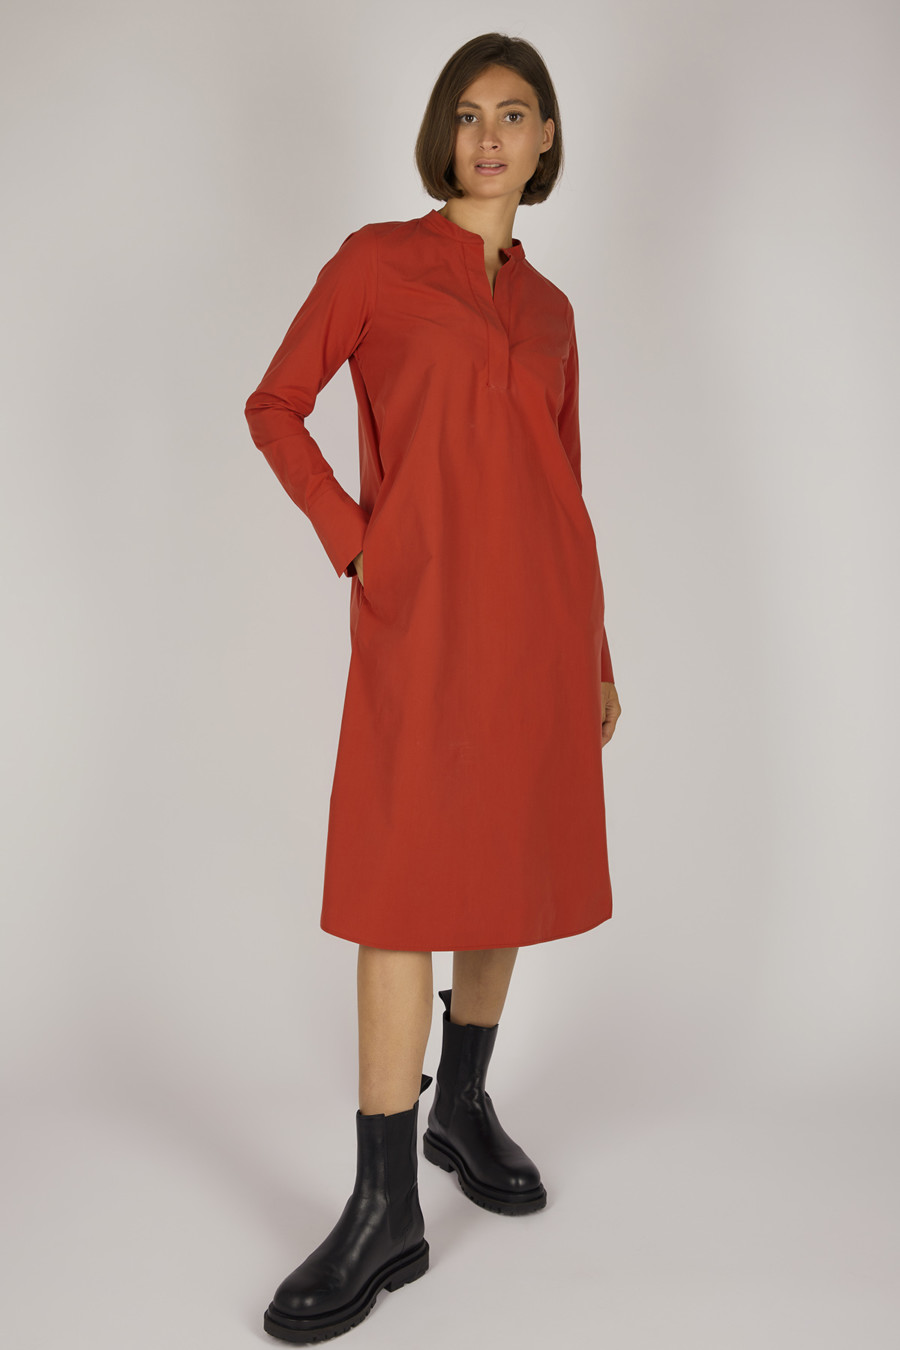 ETTA – Calf-length cotton dress – Color: Red Hot